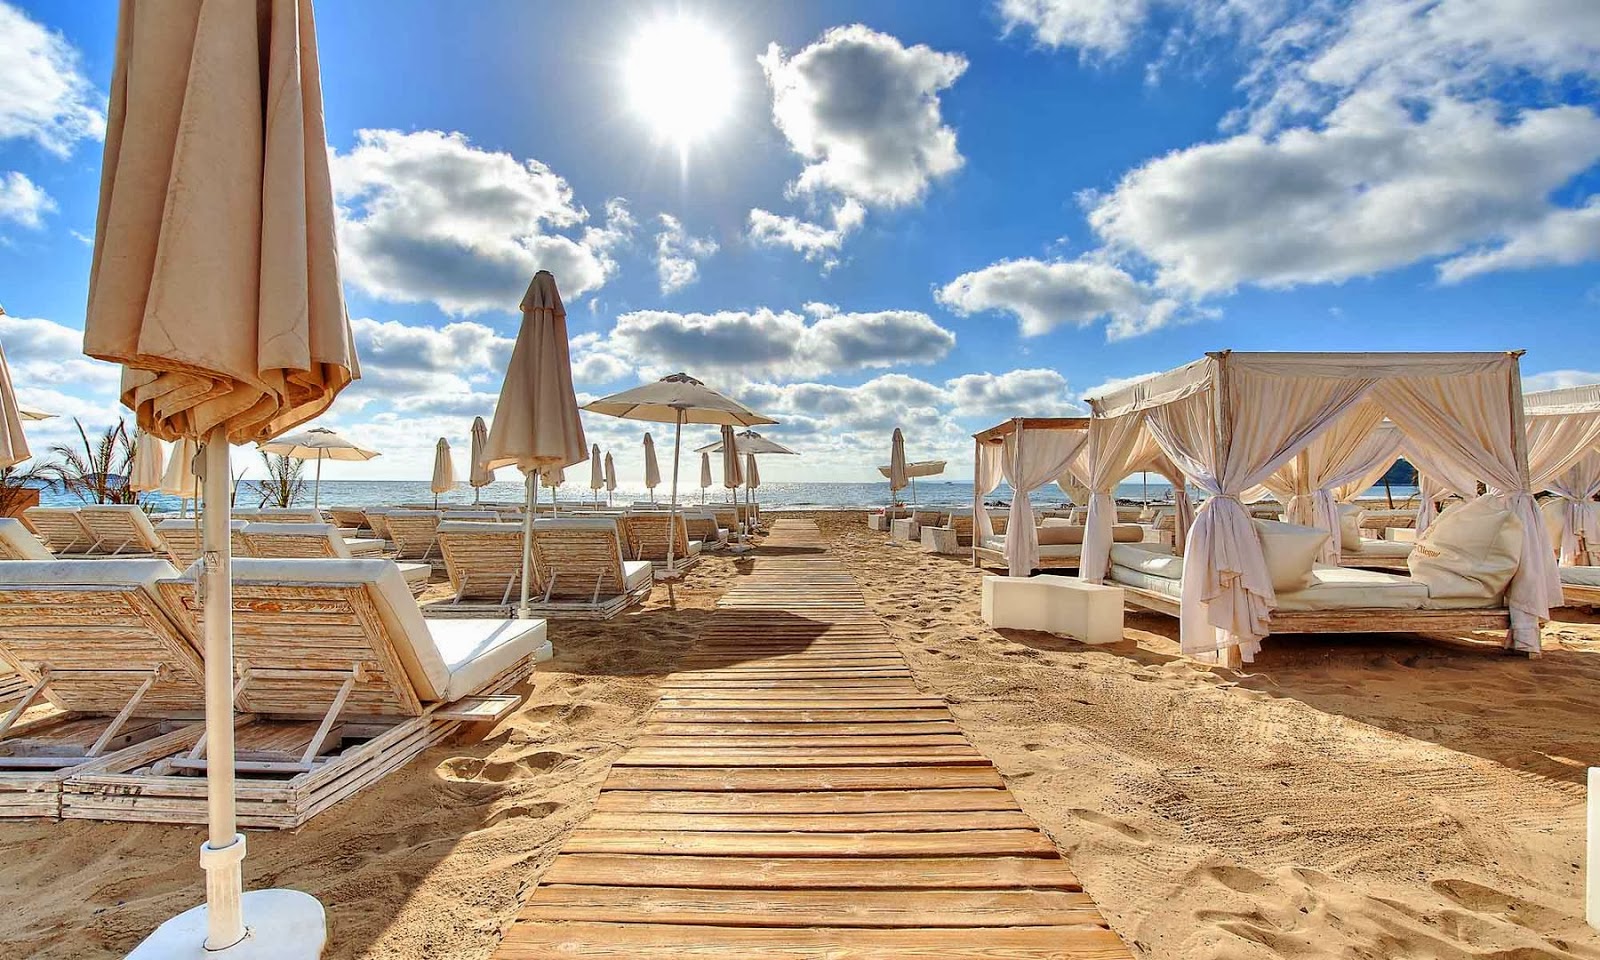 Luxury Life Design: Ushuaïa Beach Hotel in Ibiza - the sexiest island ...